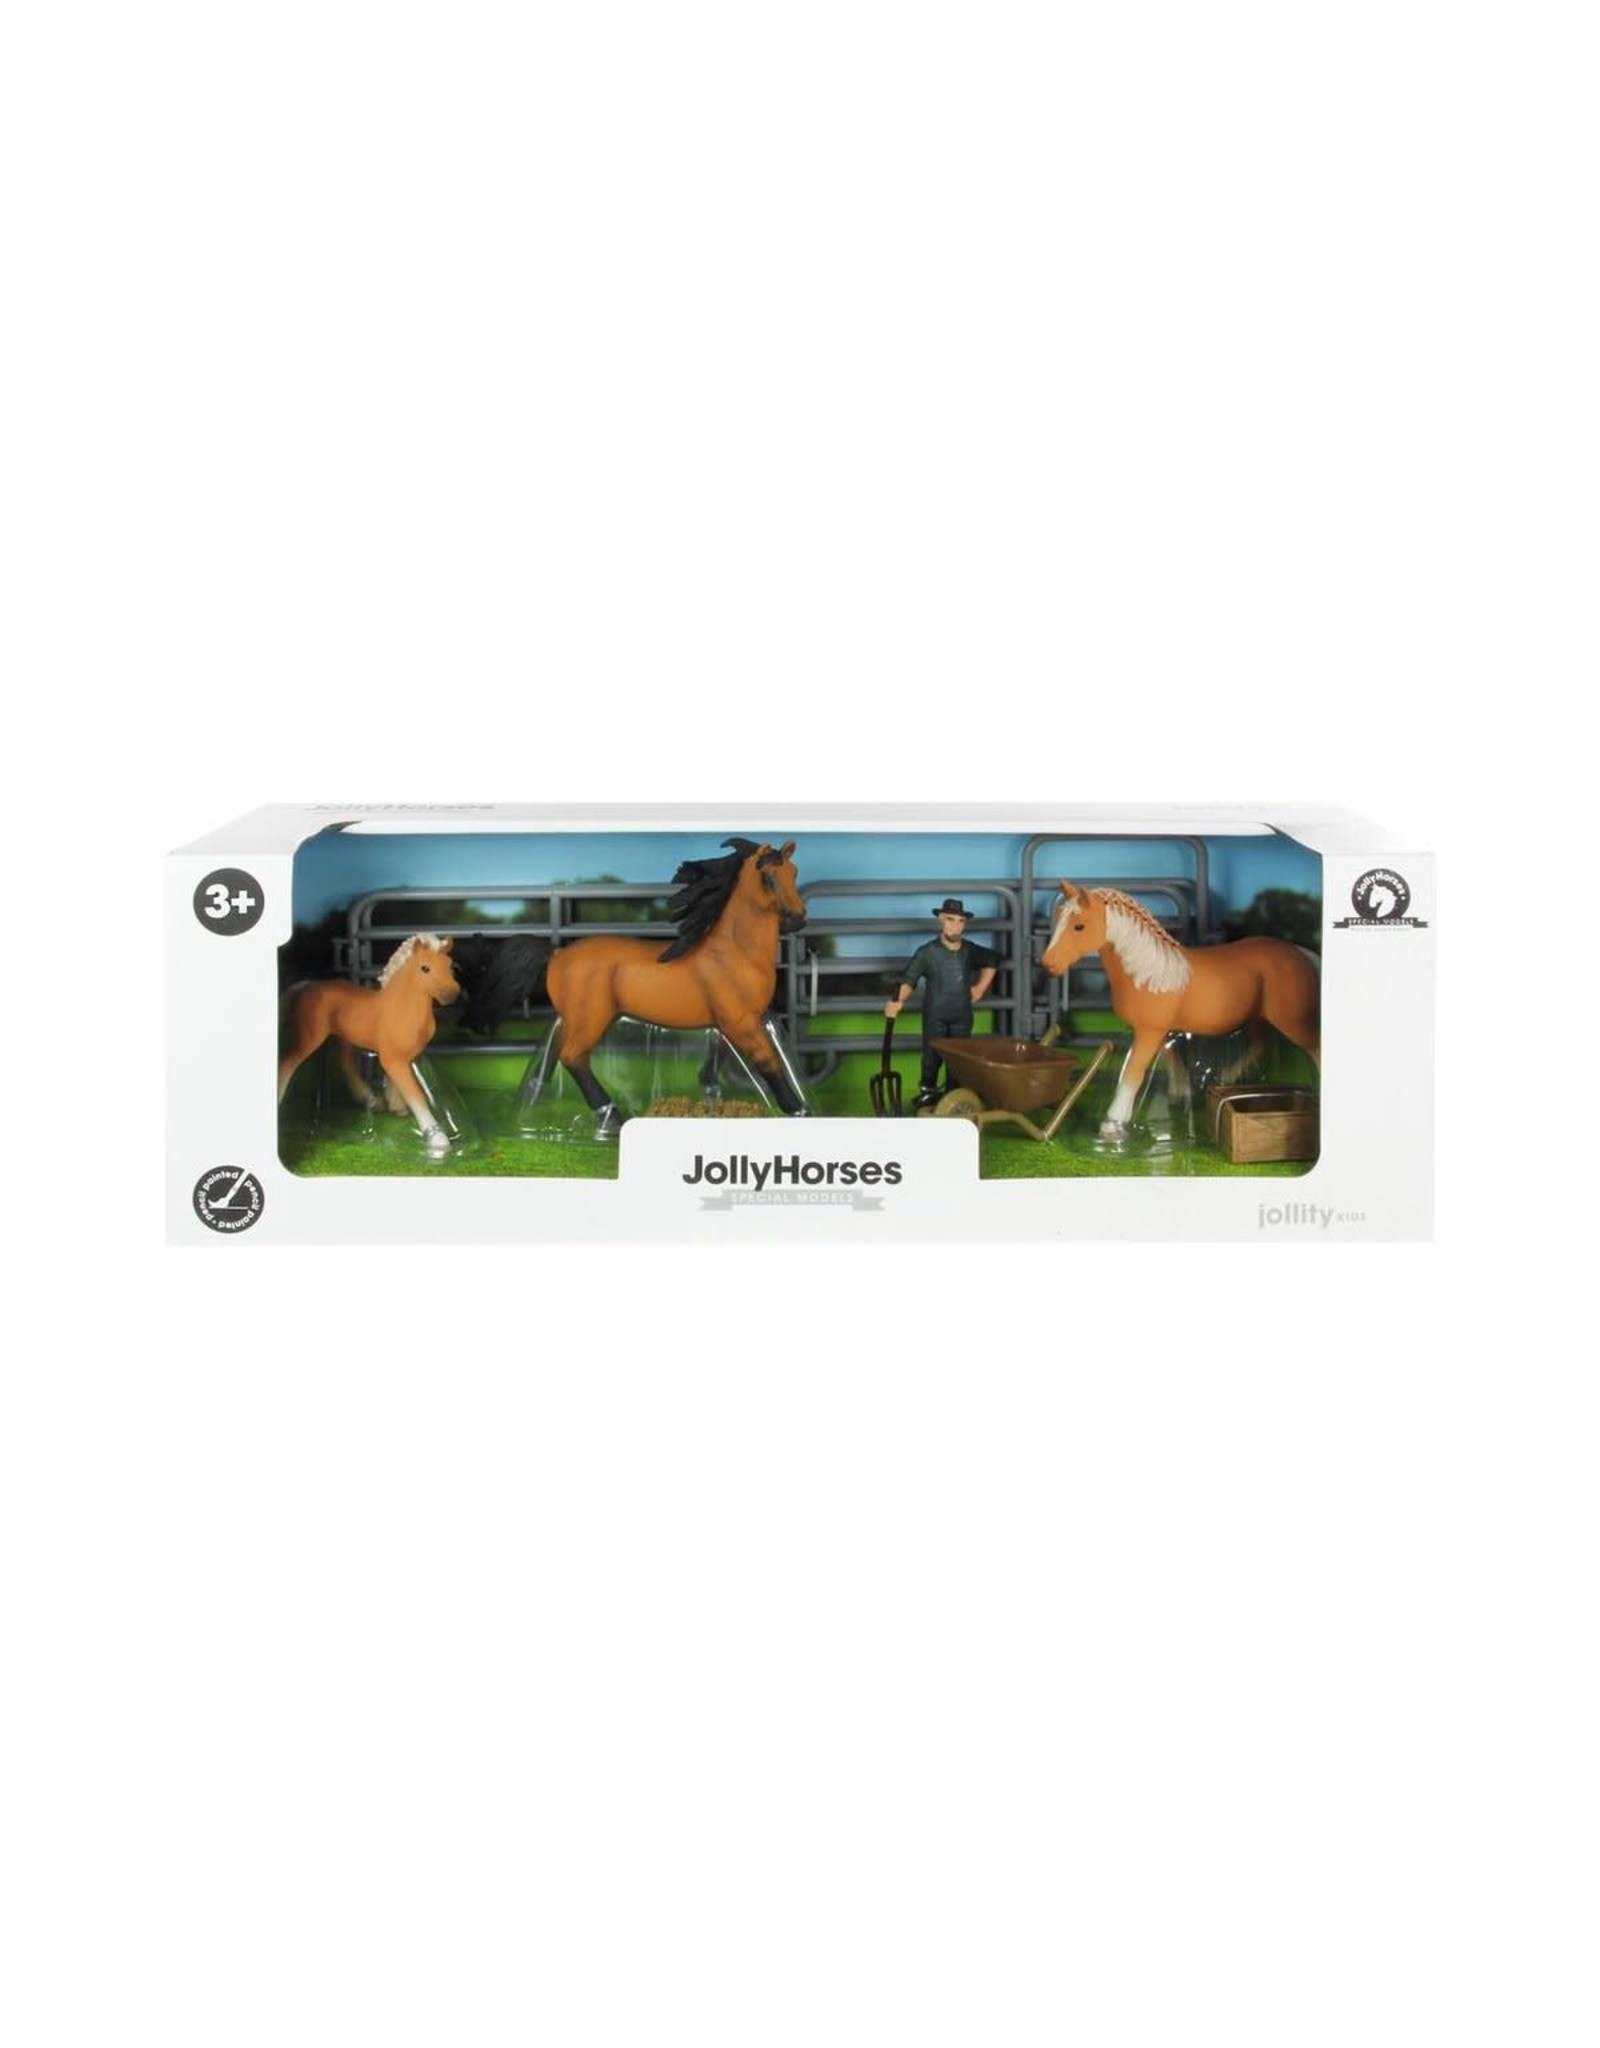 JollyHorses: Quarter Horse Bay + Palomino paard + veulen + hek + boer + accessoires